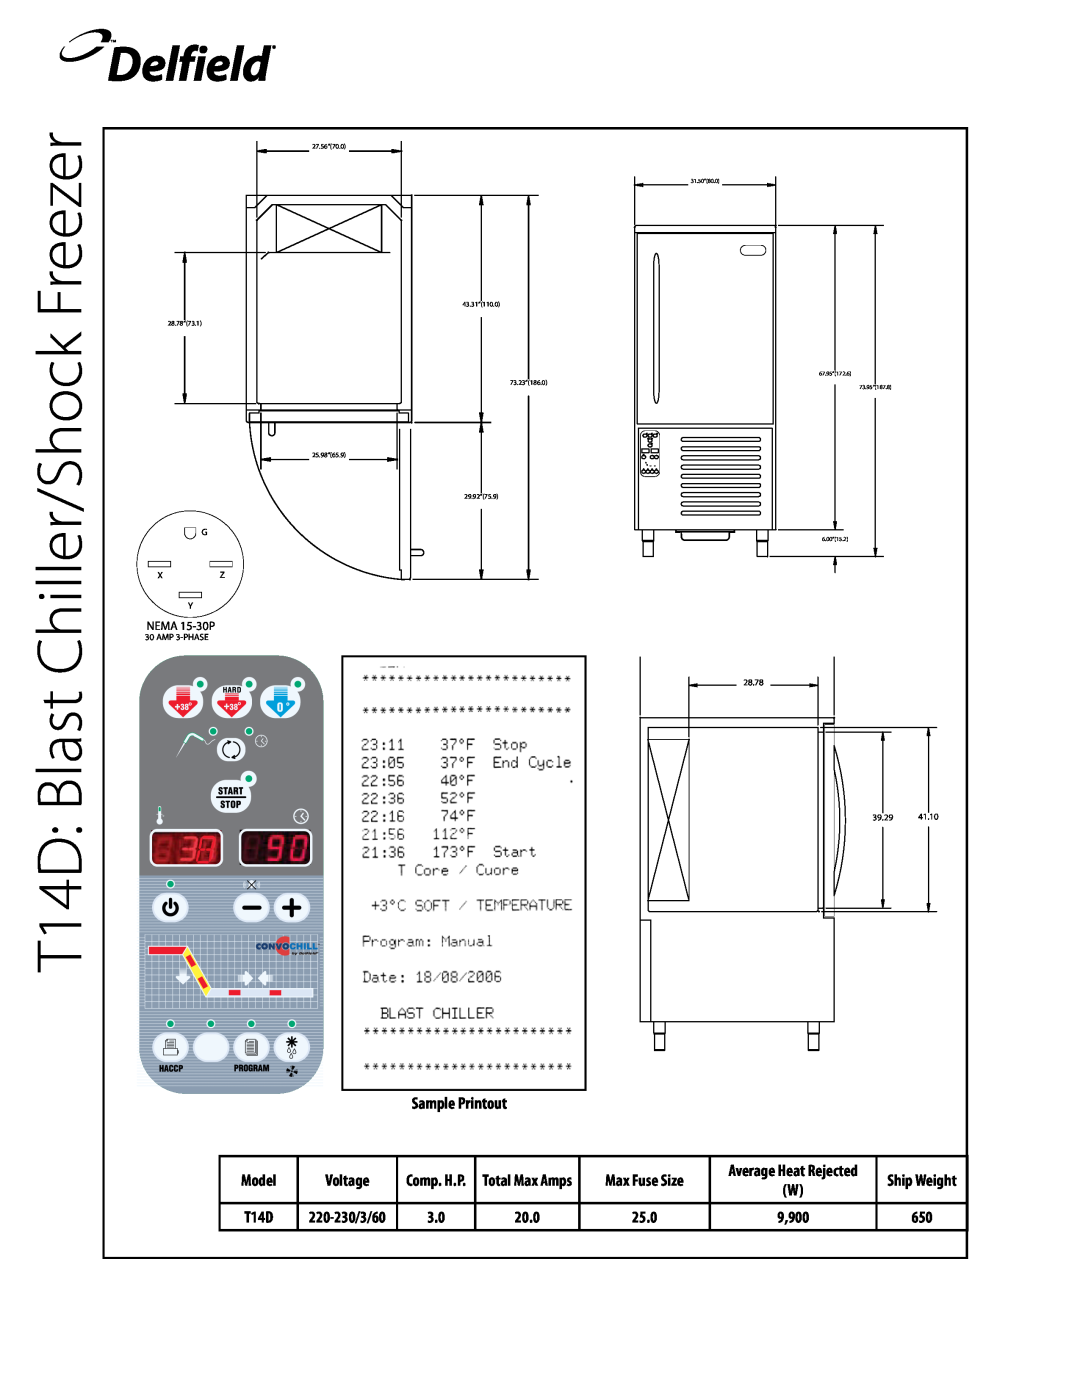 Delfield T14D Blast Chiller/Shock Freezer, Delfield, Sample Printout, Max Fuse Size, 220-230/3/60, Ship Weight, 0 